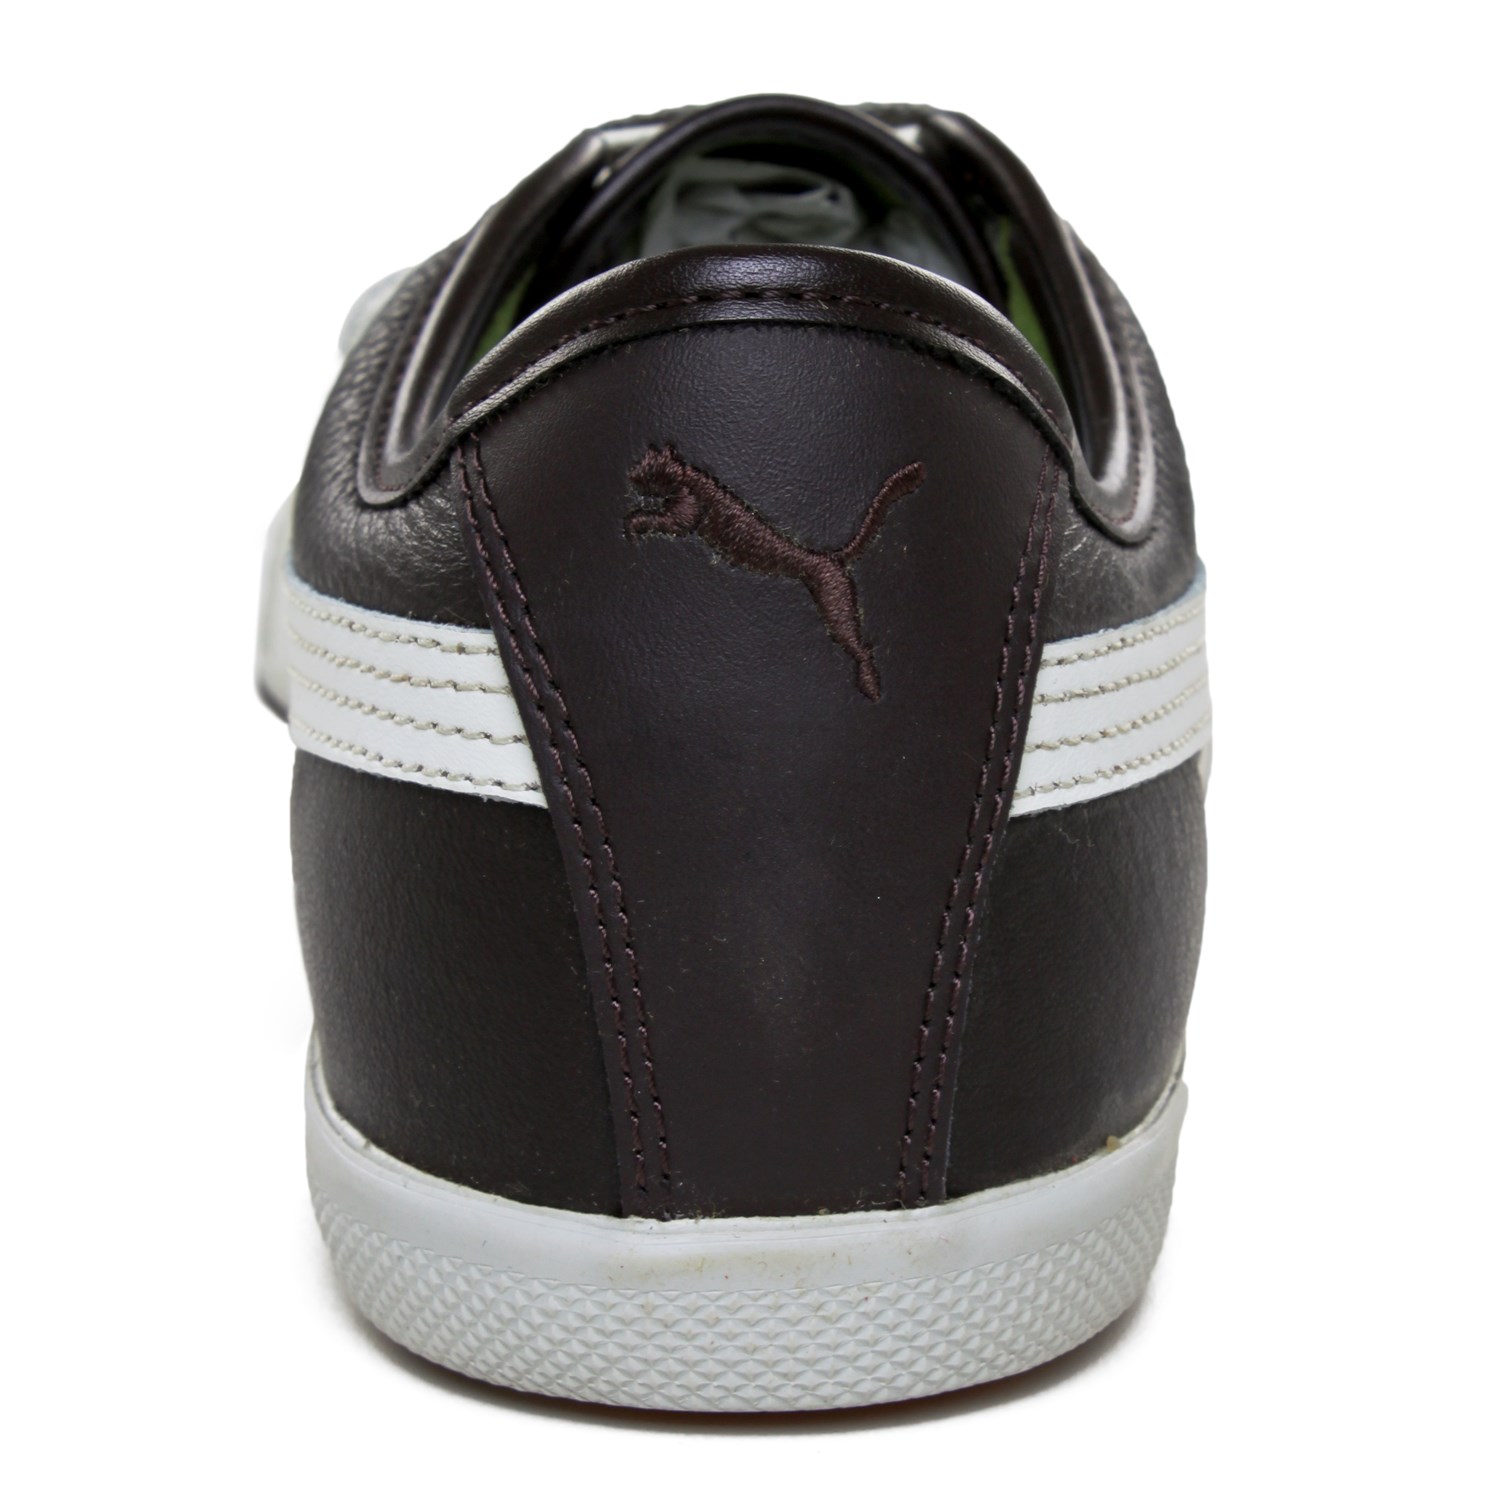 Puma Benecio Leather Shoes |